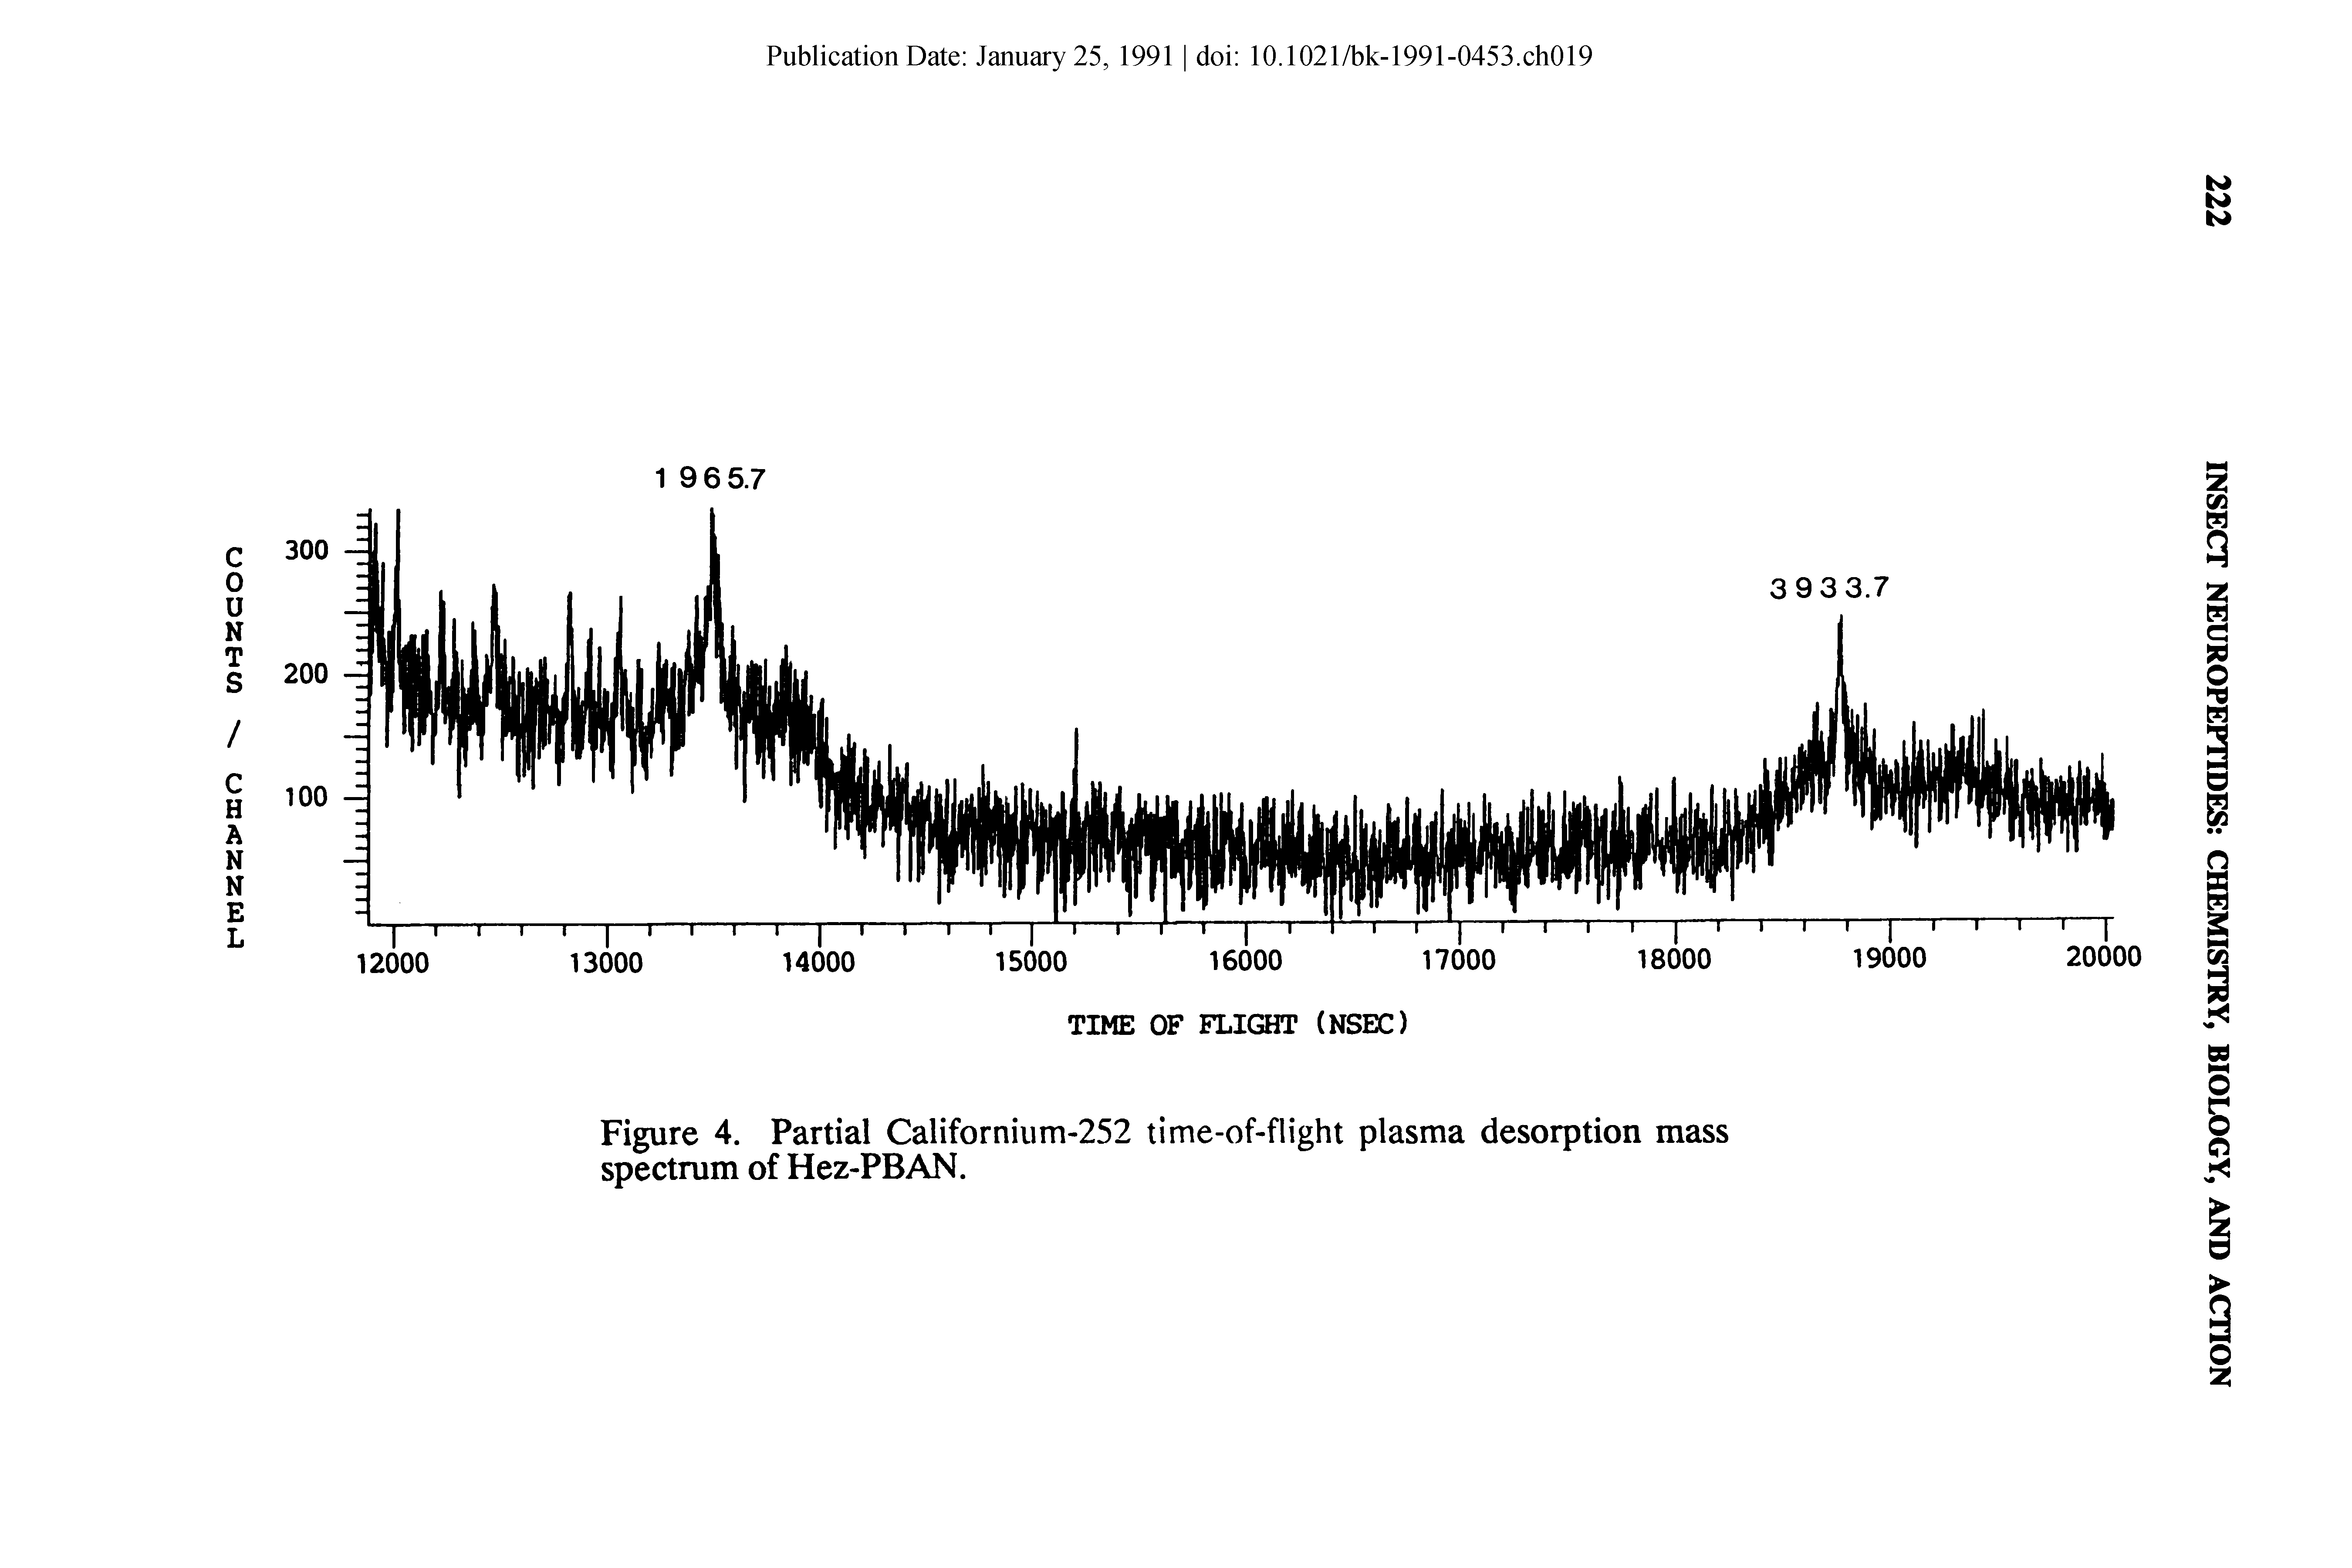 Figure 4. Partial Californium-252 time-of-flight plasma desorption mass spectrum of Hez-PBAN.